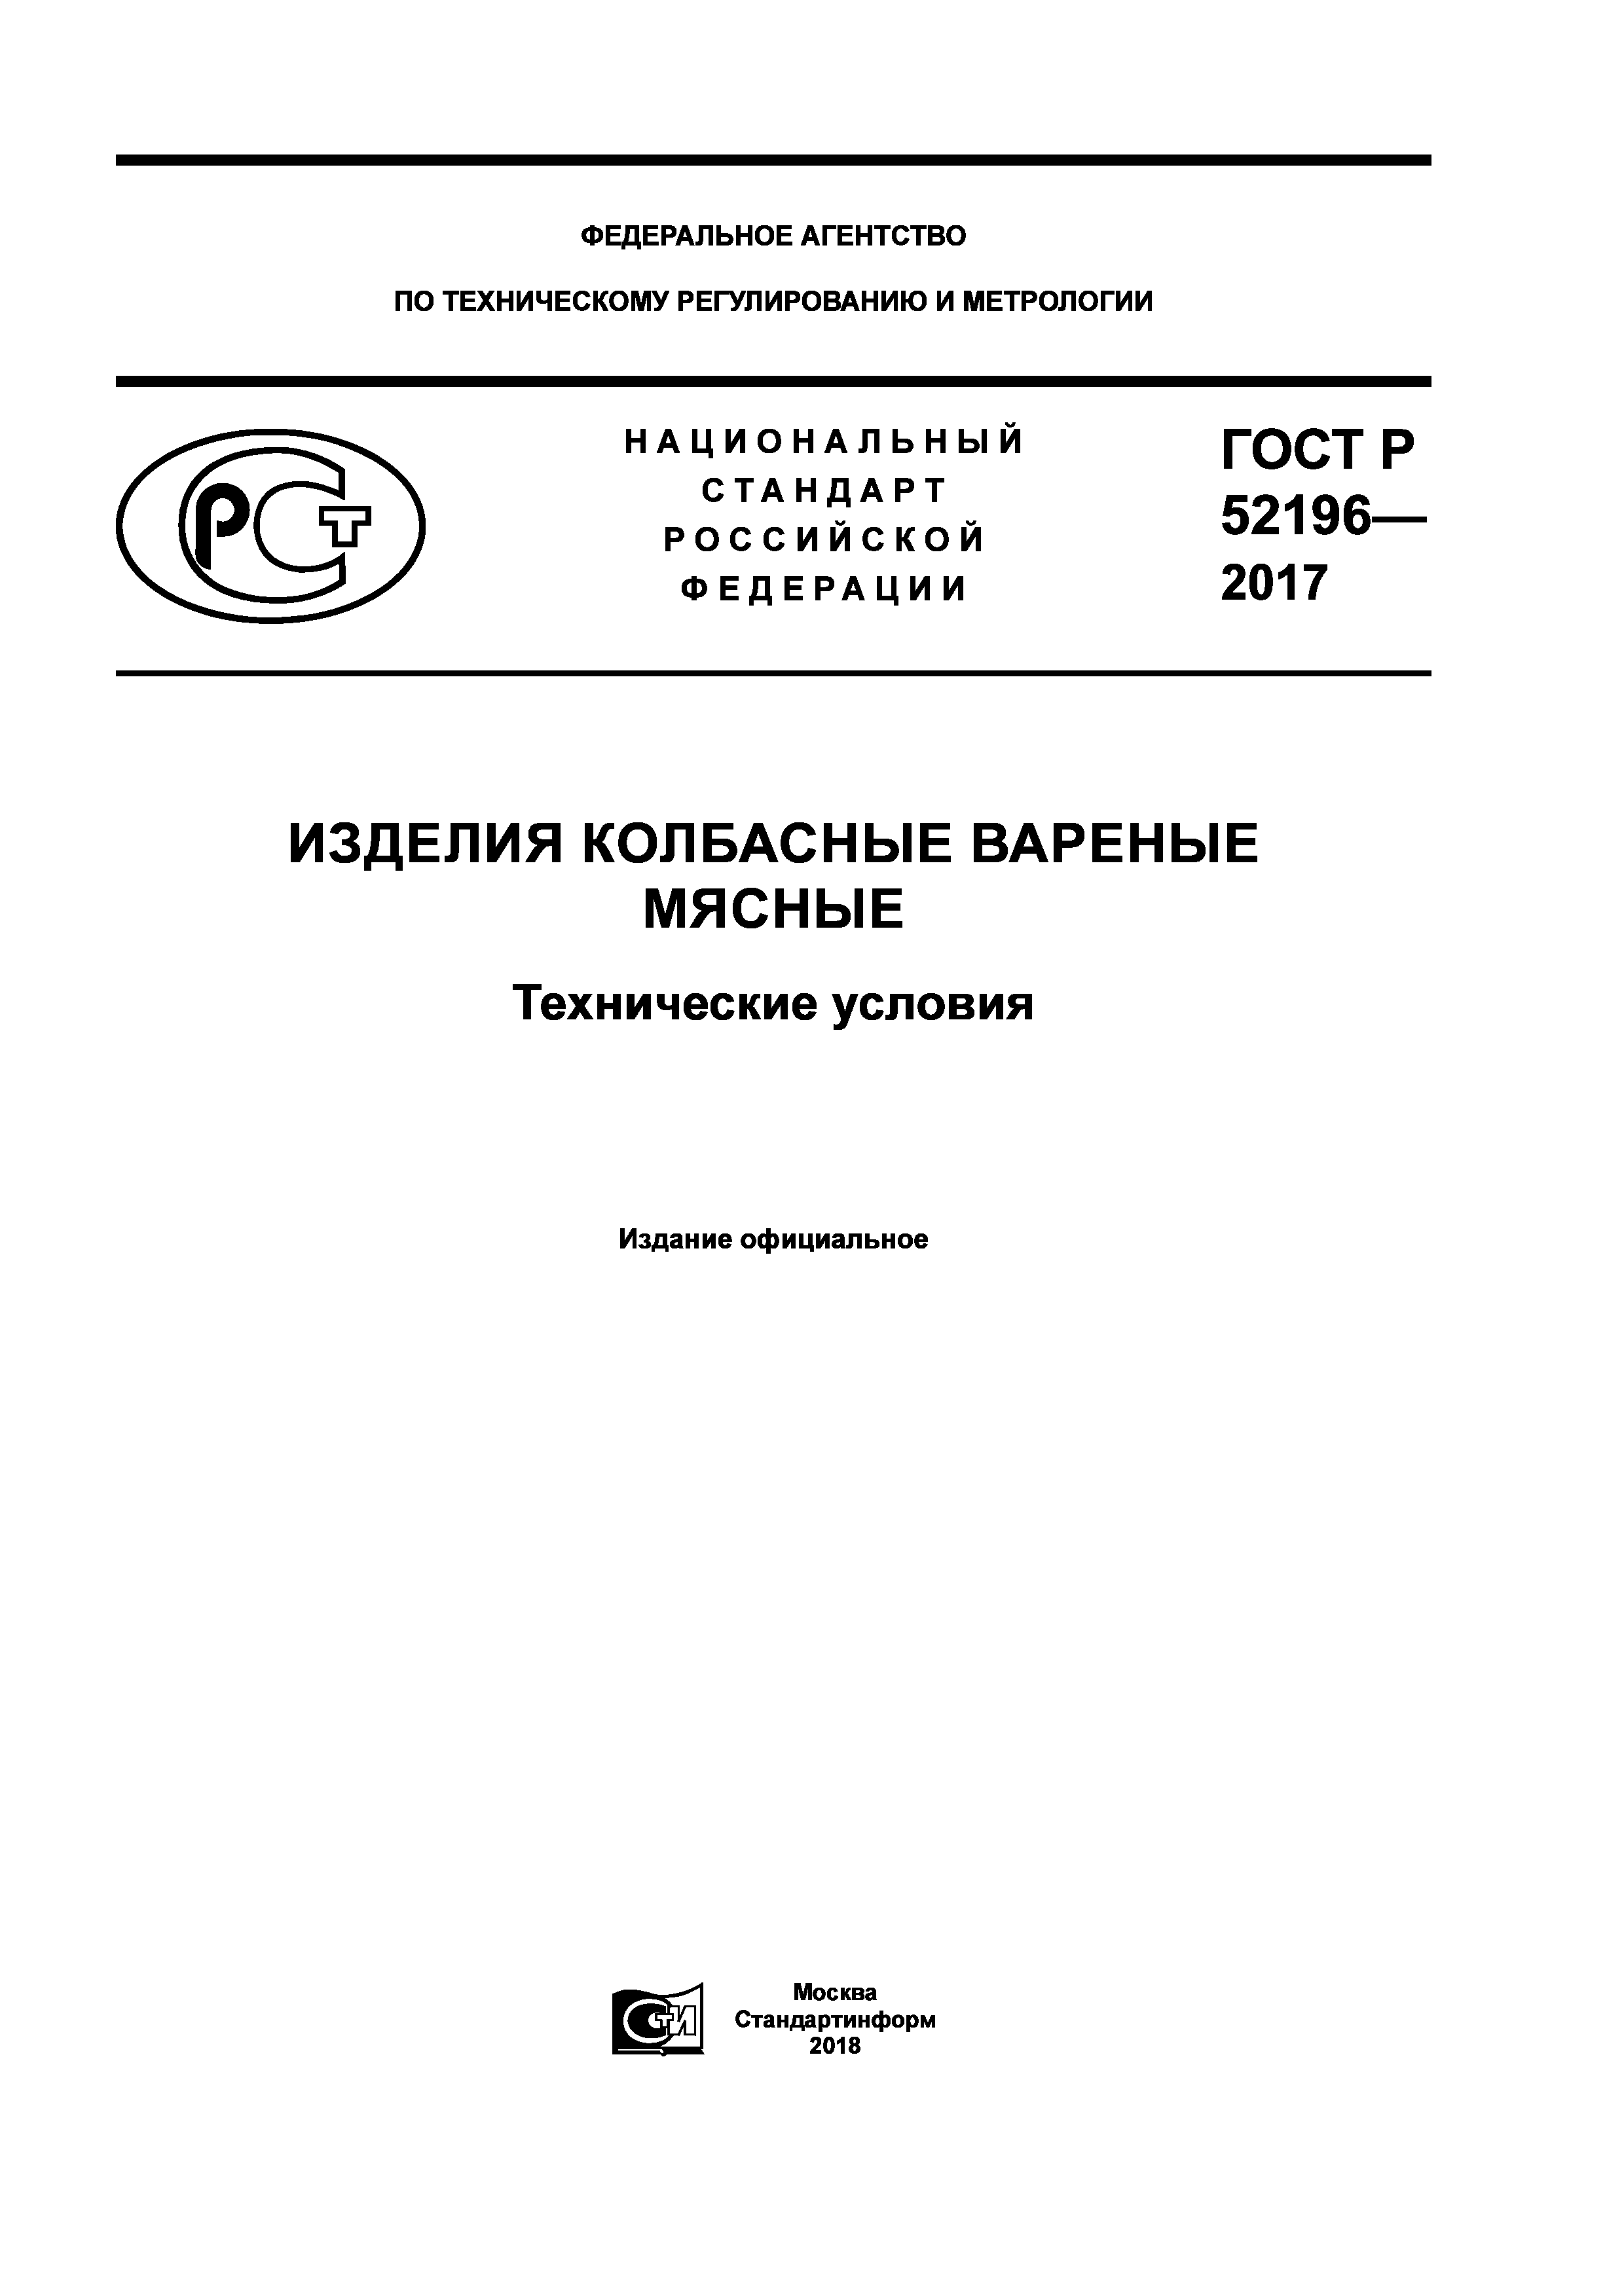 ГОСТ Р 52196-2017